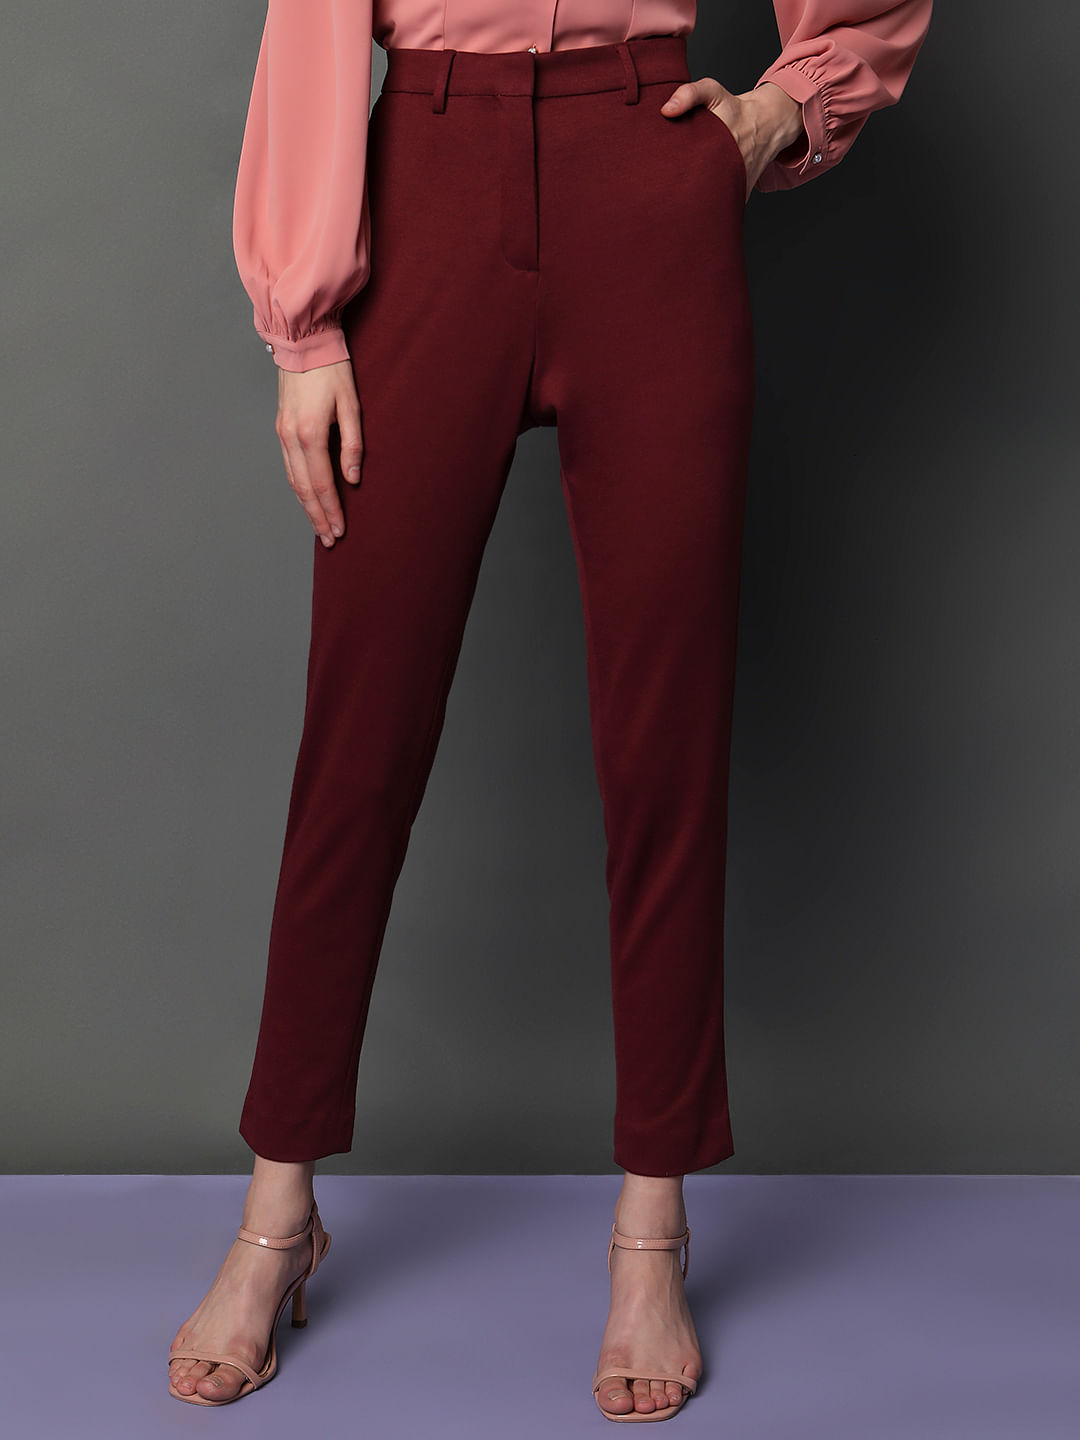 ASOS DESIGN slim tuxedo suit pants in burgundy | ASOS